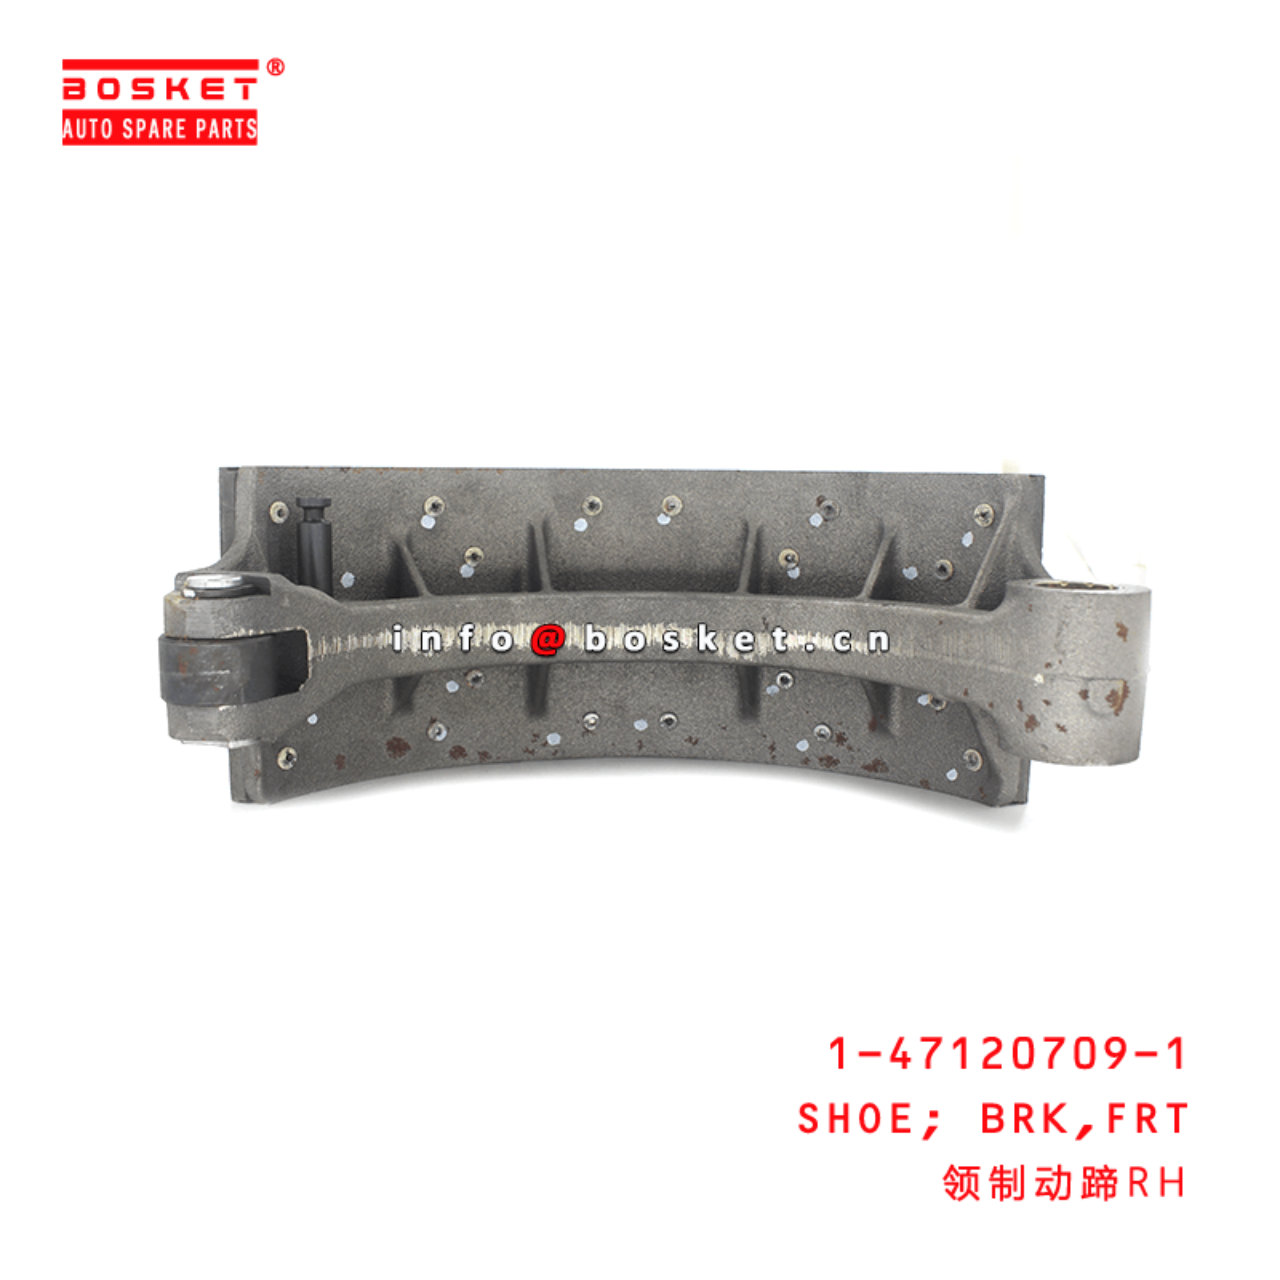 1-47120709-1 Front Brake Shoe 1471207091 Suitable for ISUZU FTR